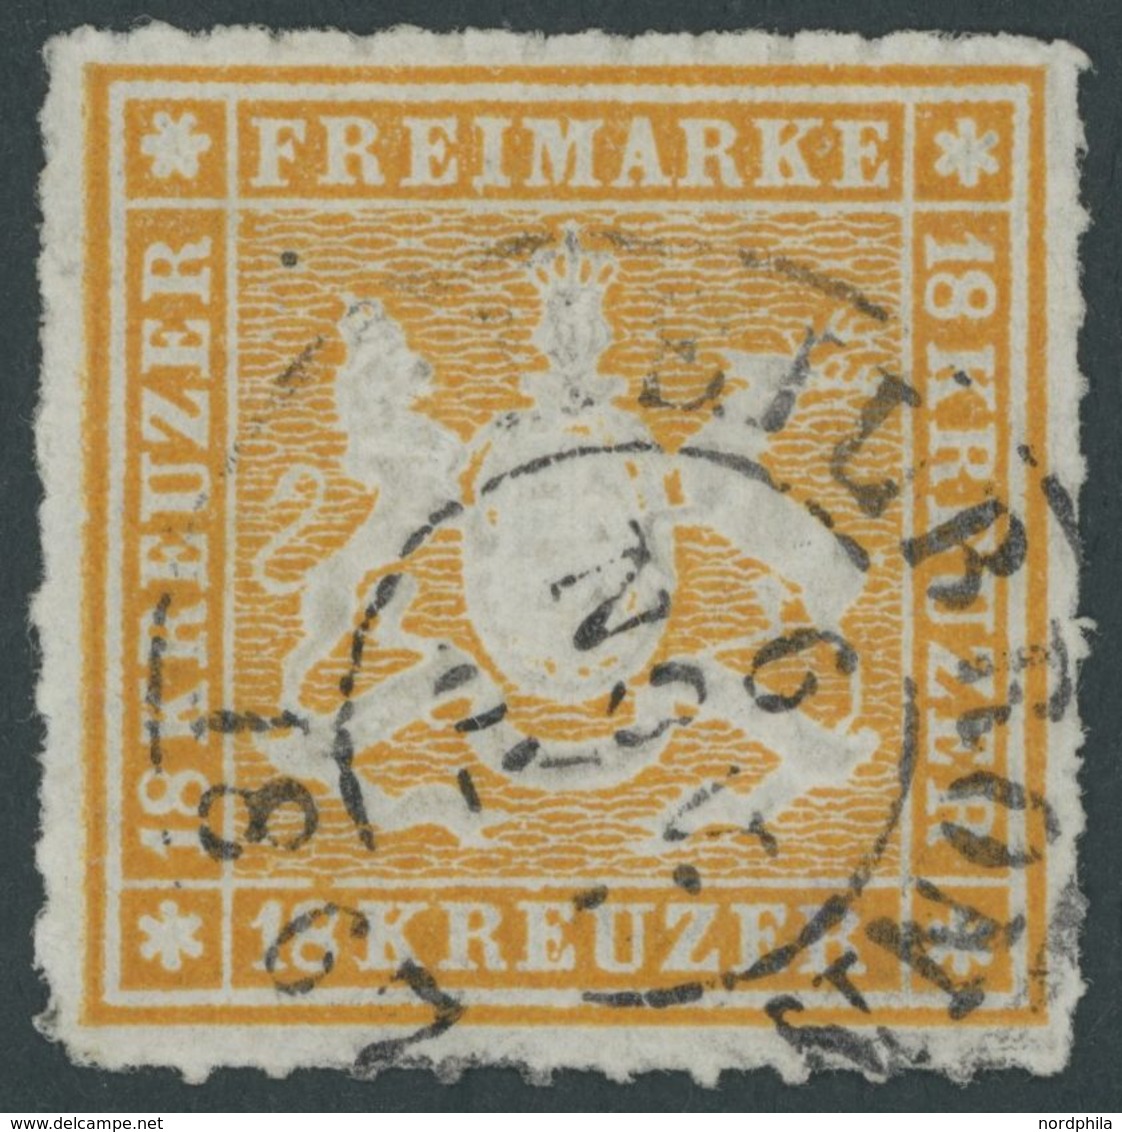 WÜRTTEMBERG 34 O, 1867, 18 Kr. Orangegelb, K2 HEILBRONN, Farbfrisches Prachtstück, Fotoattest Thoma, Mi. 1000.- - Other & Unclassified